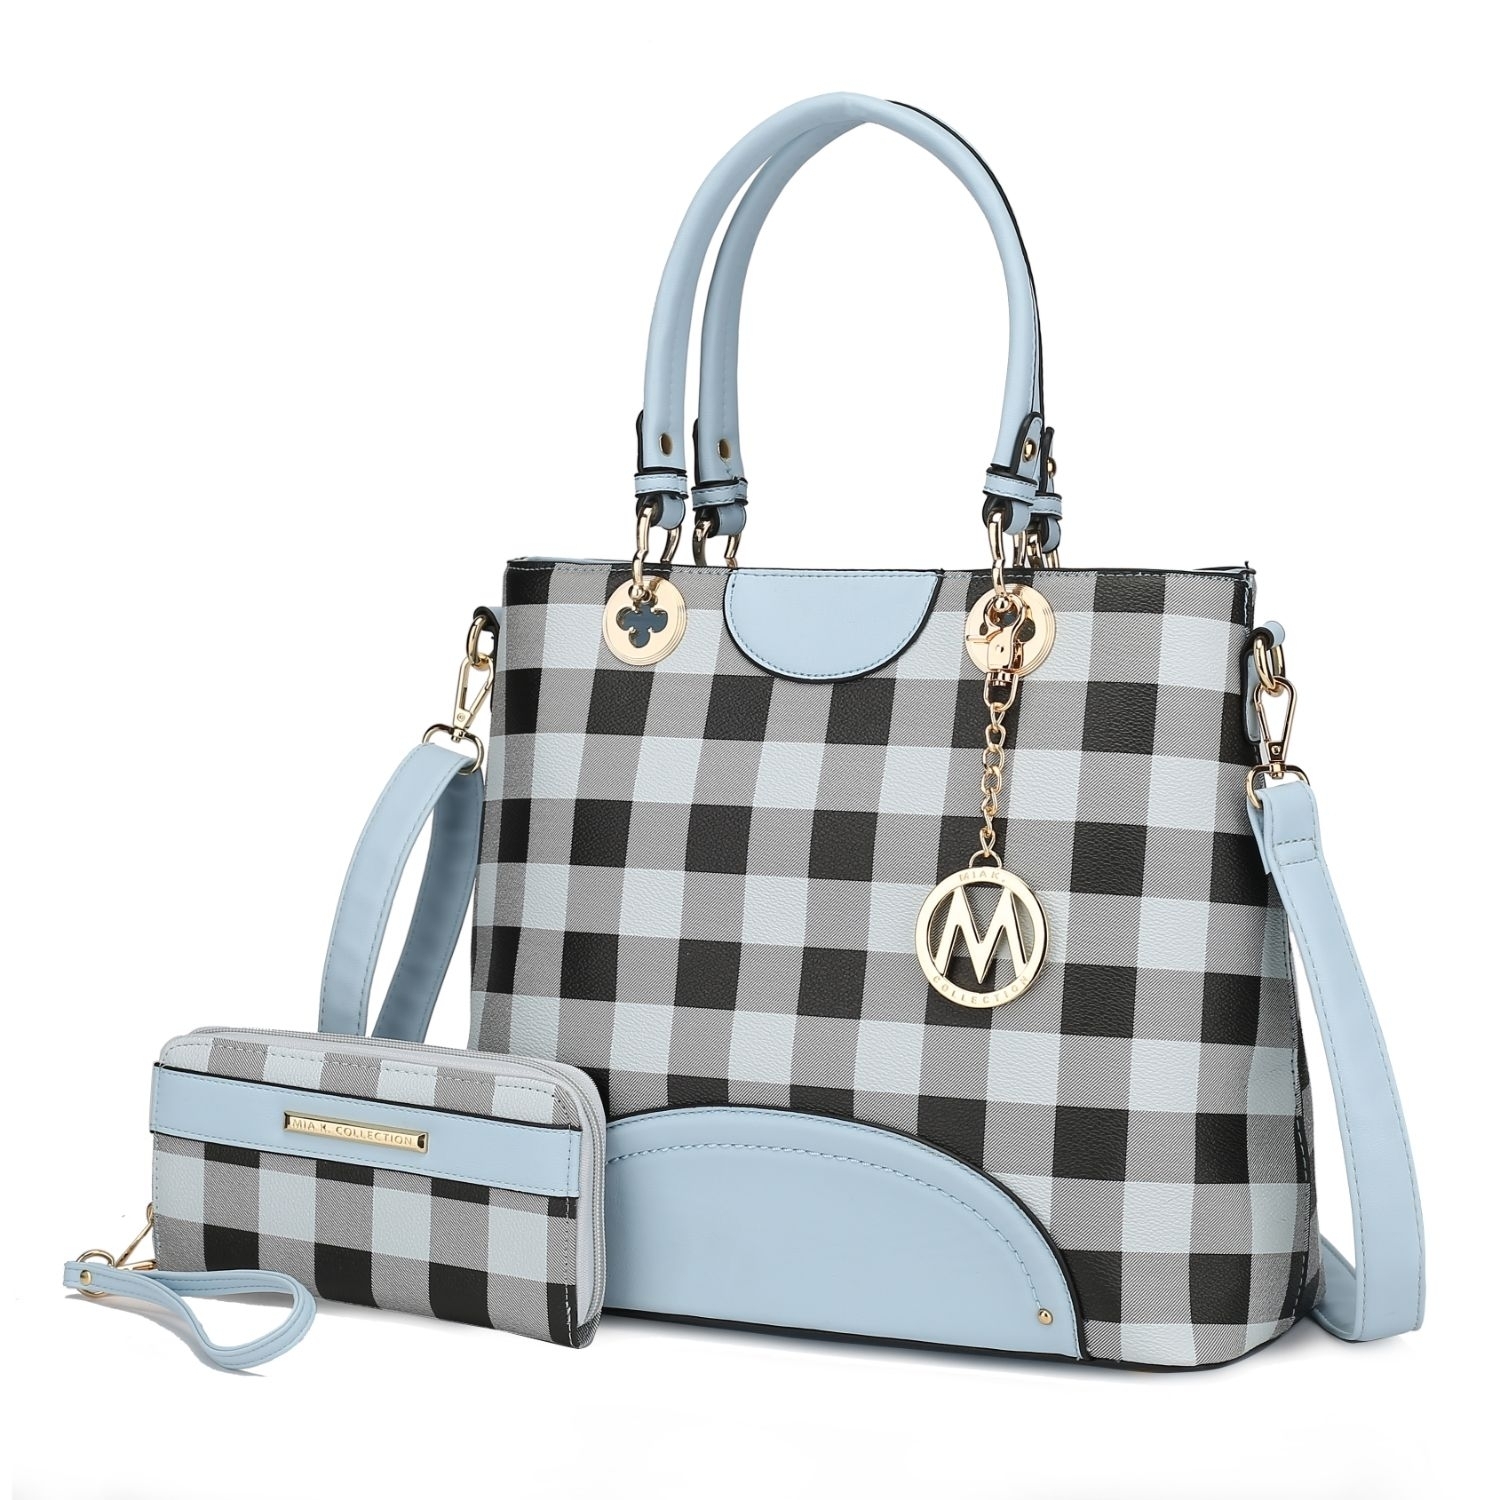 MKF Collection Gabriella Checkers Tote Handbag With Wallet By Mia K. - Light Blue